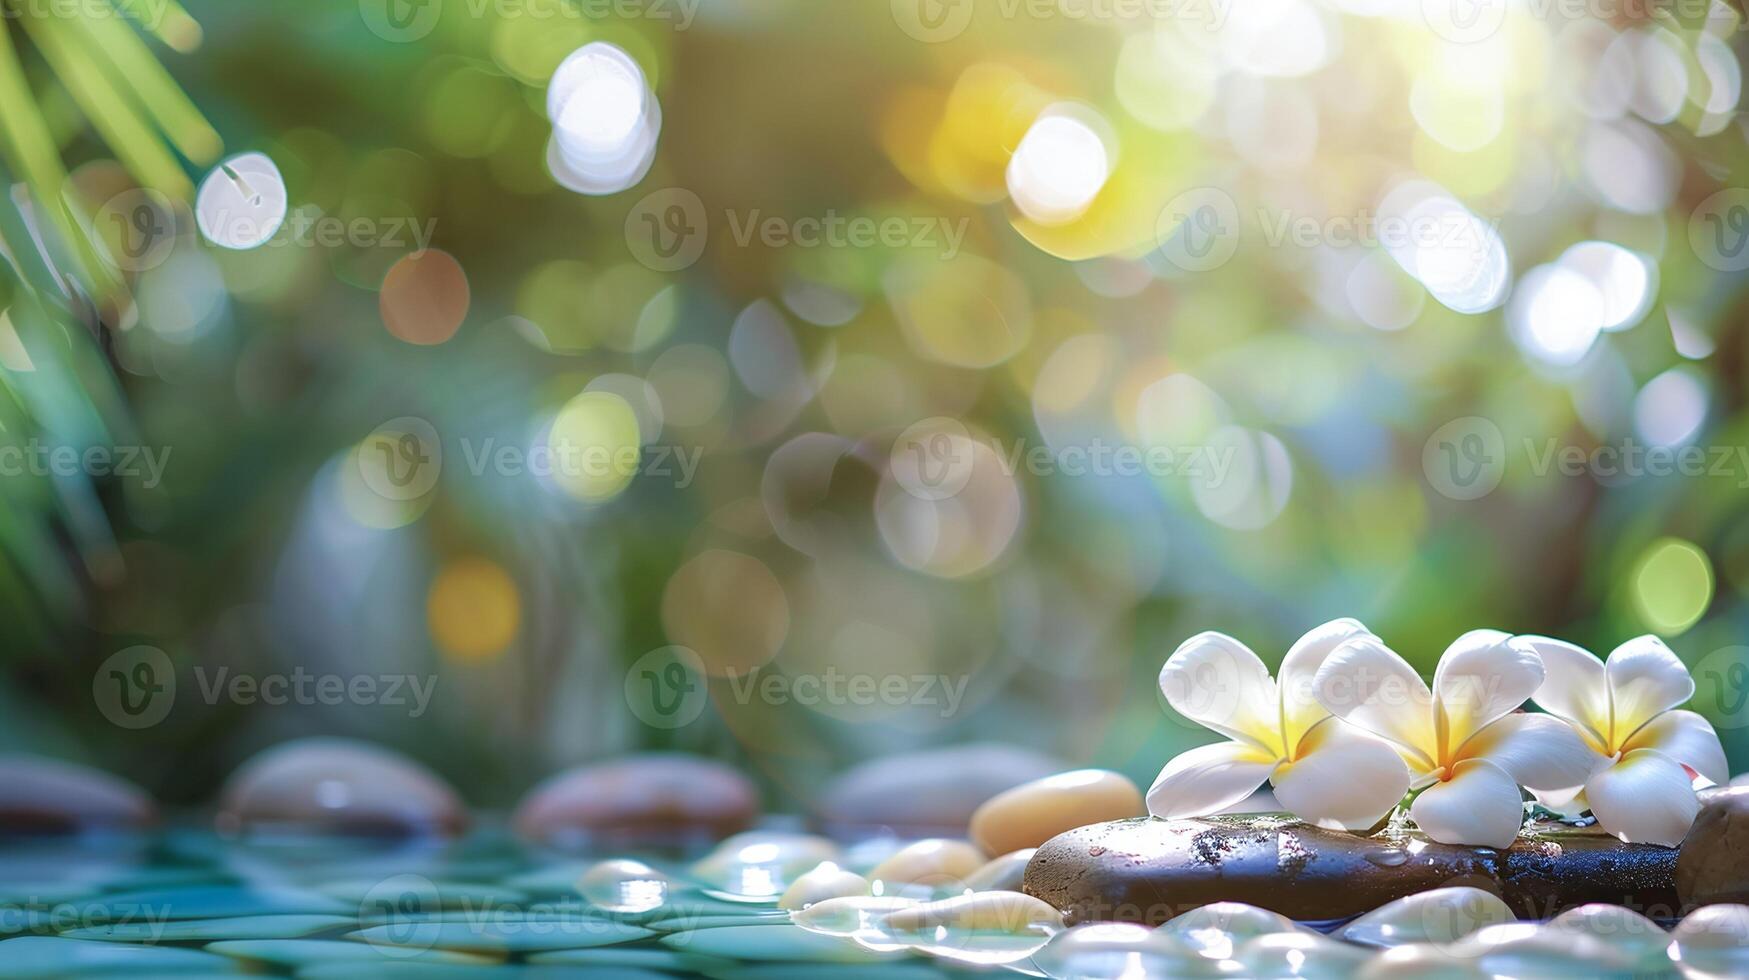 Frangipani flowers on wet stones with soft bokeh light, a peaceful spa and wellness retreat scene photo